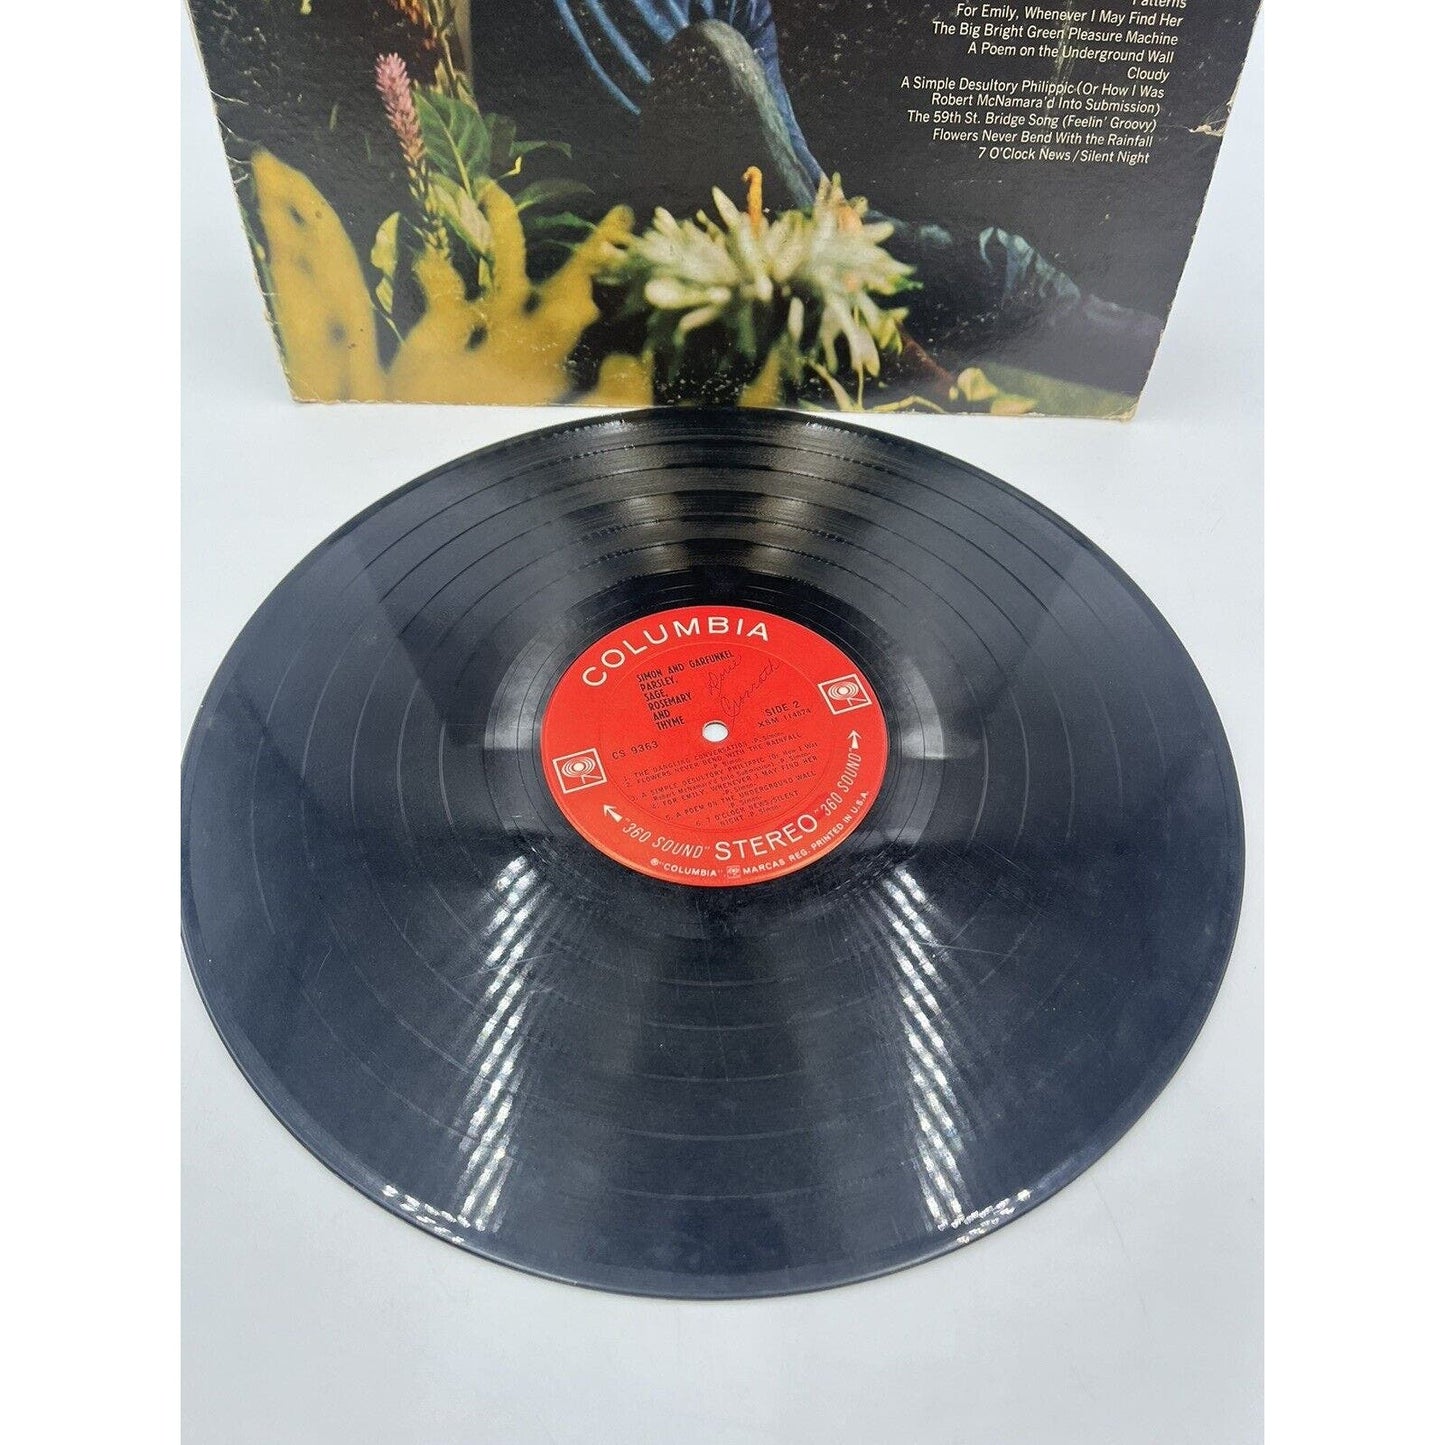 Parsley, Sage, Rosemary and Thyme Simon and Garfunkel 1966 - LP vinyl Album